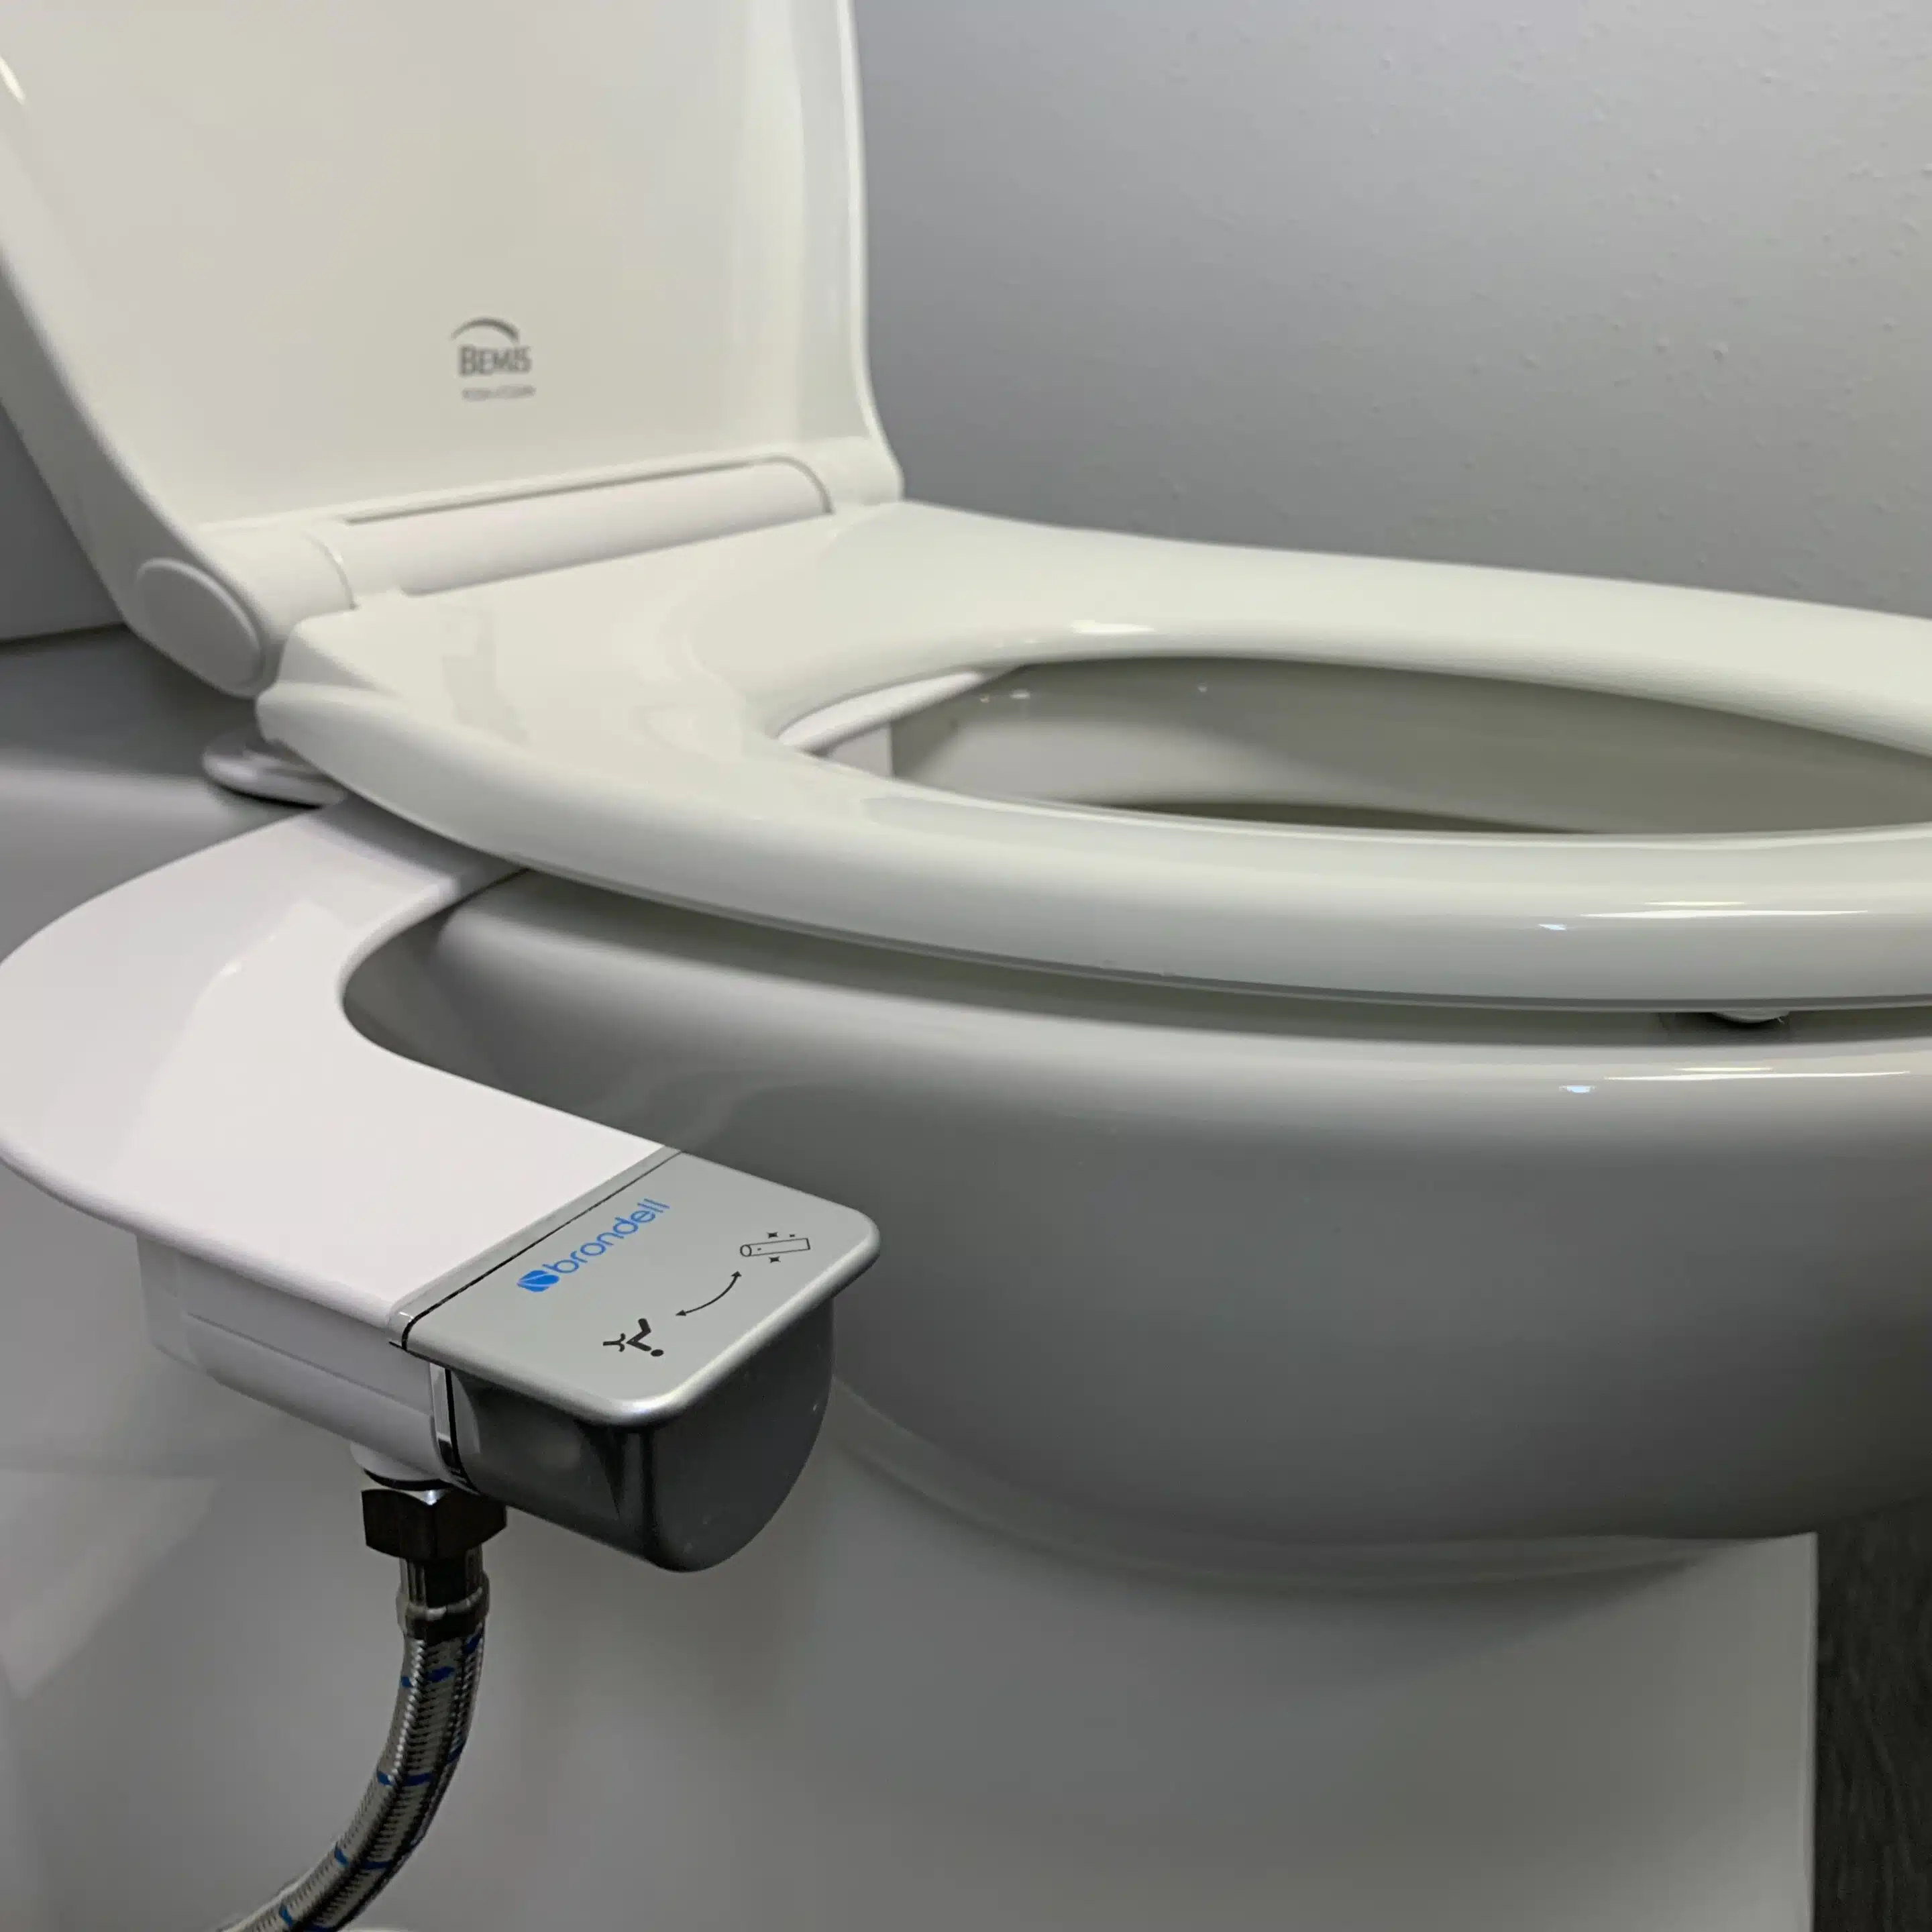 Bidet seat attachment on a toilet